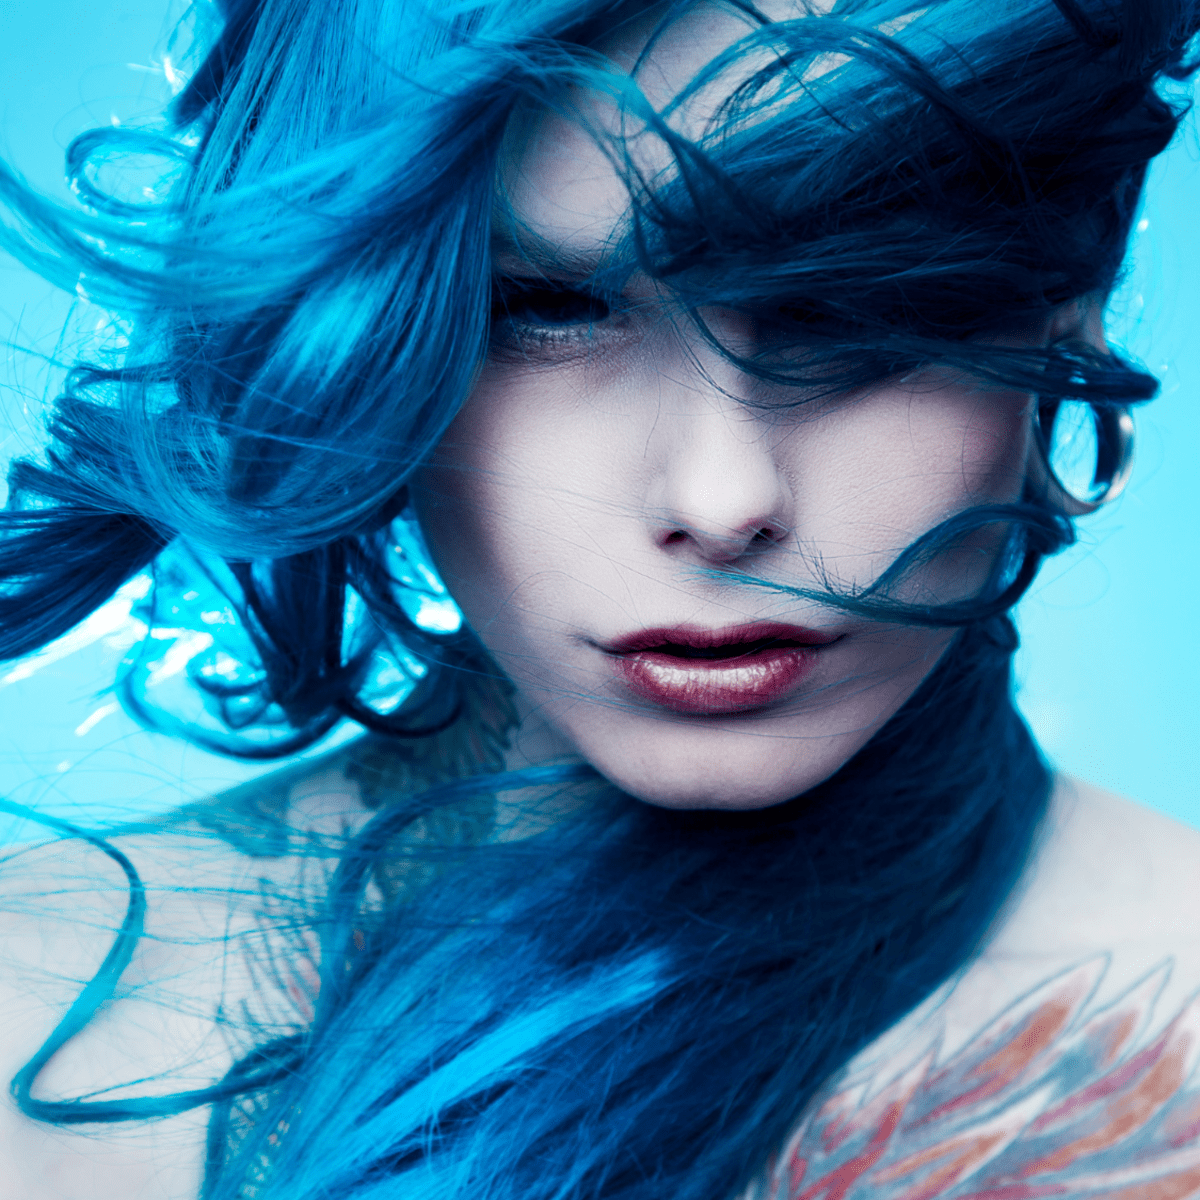 teal blue color hair